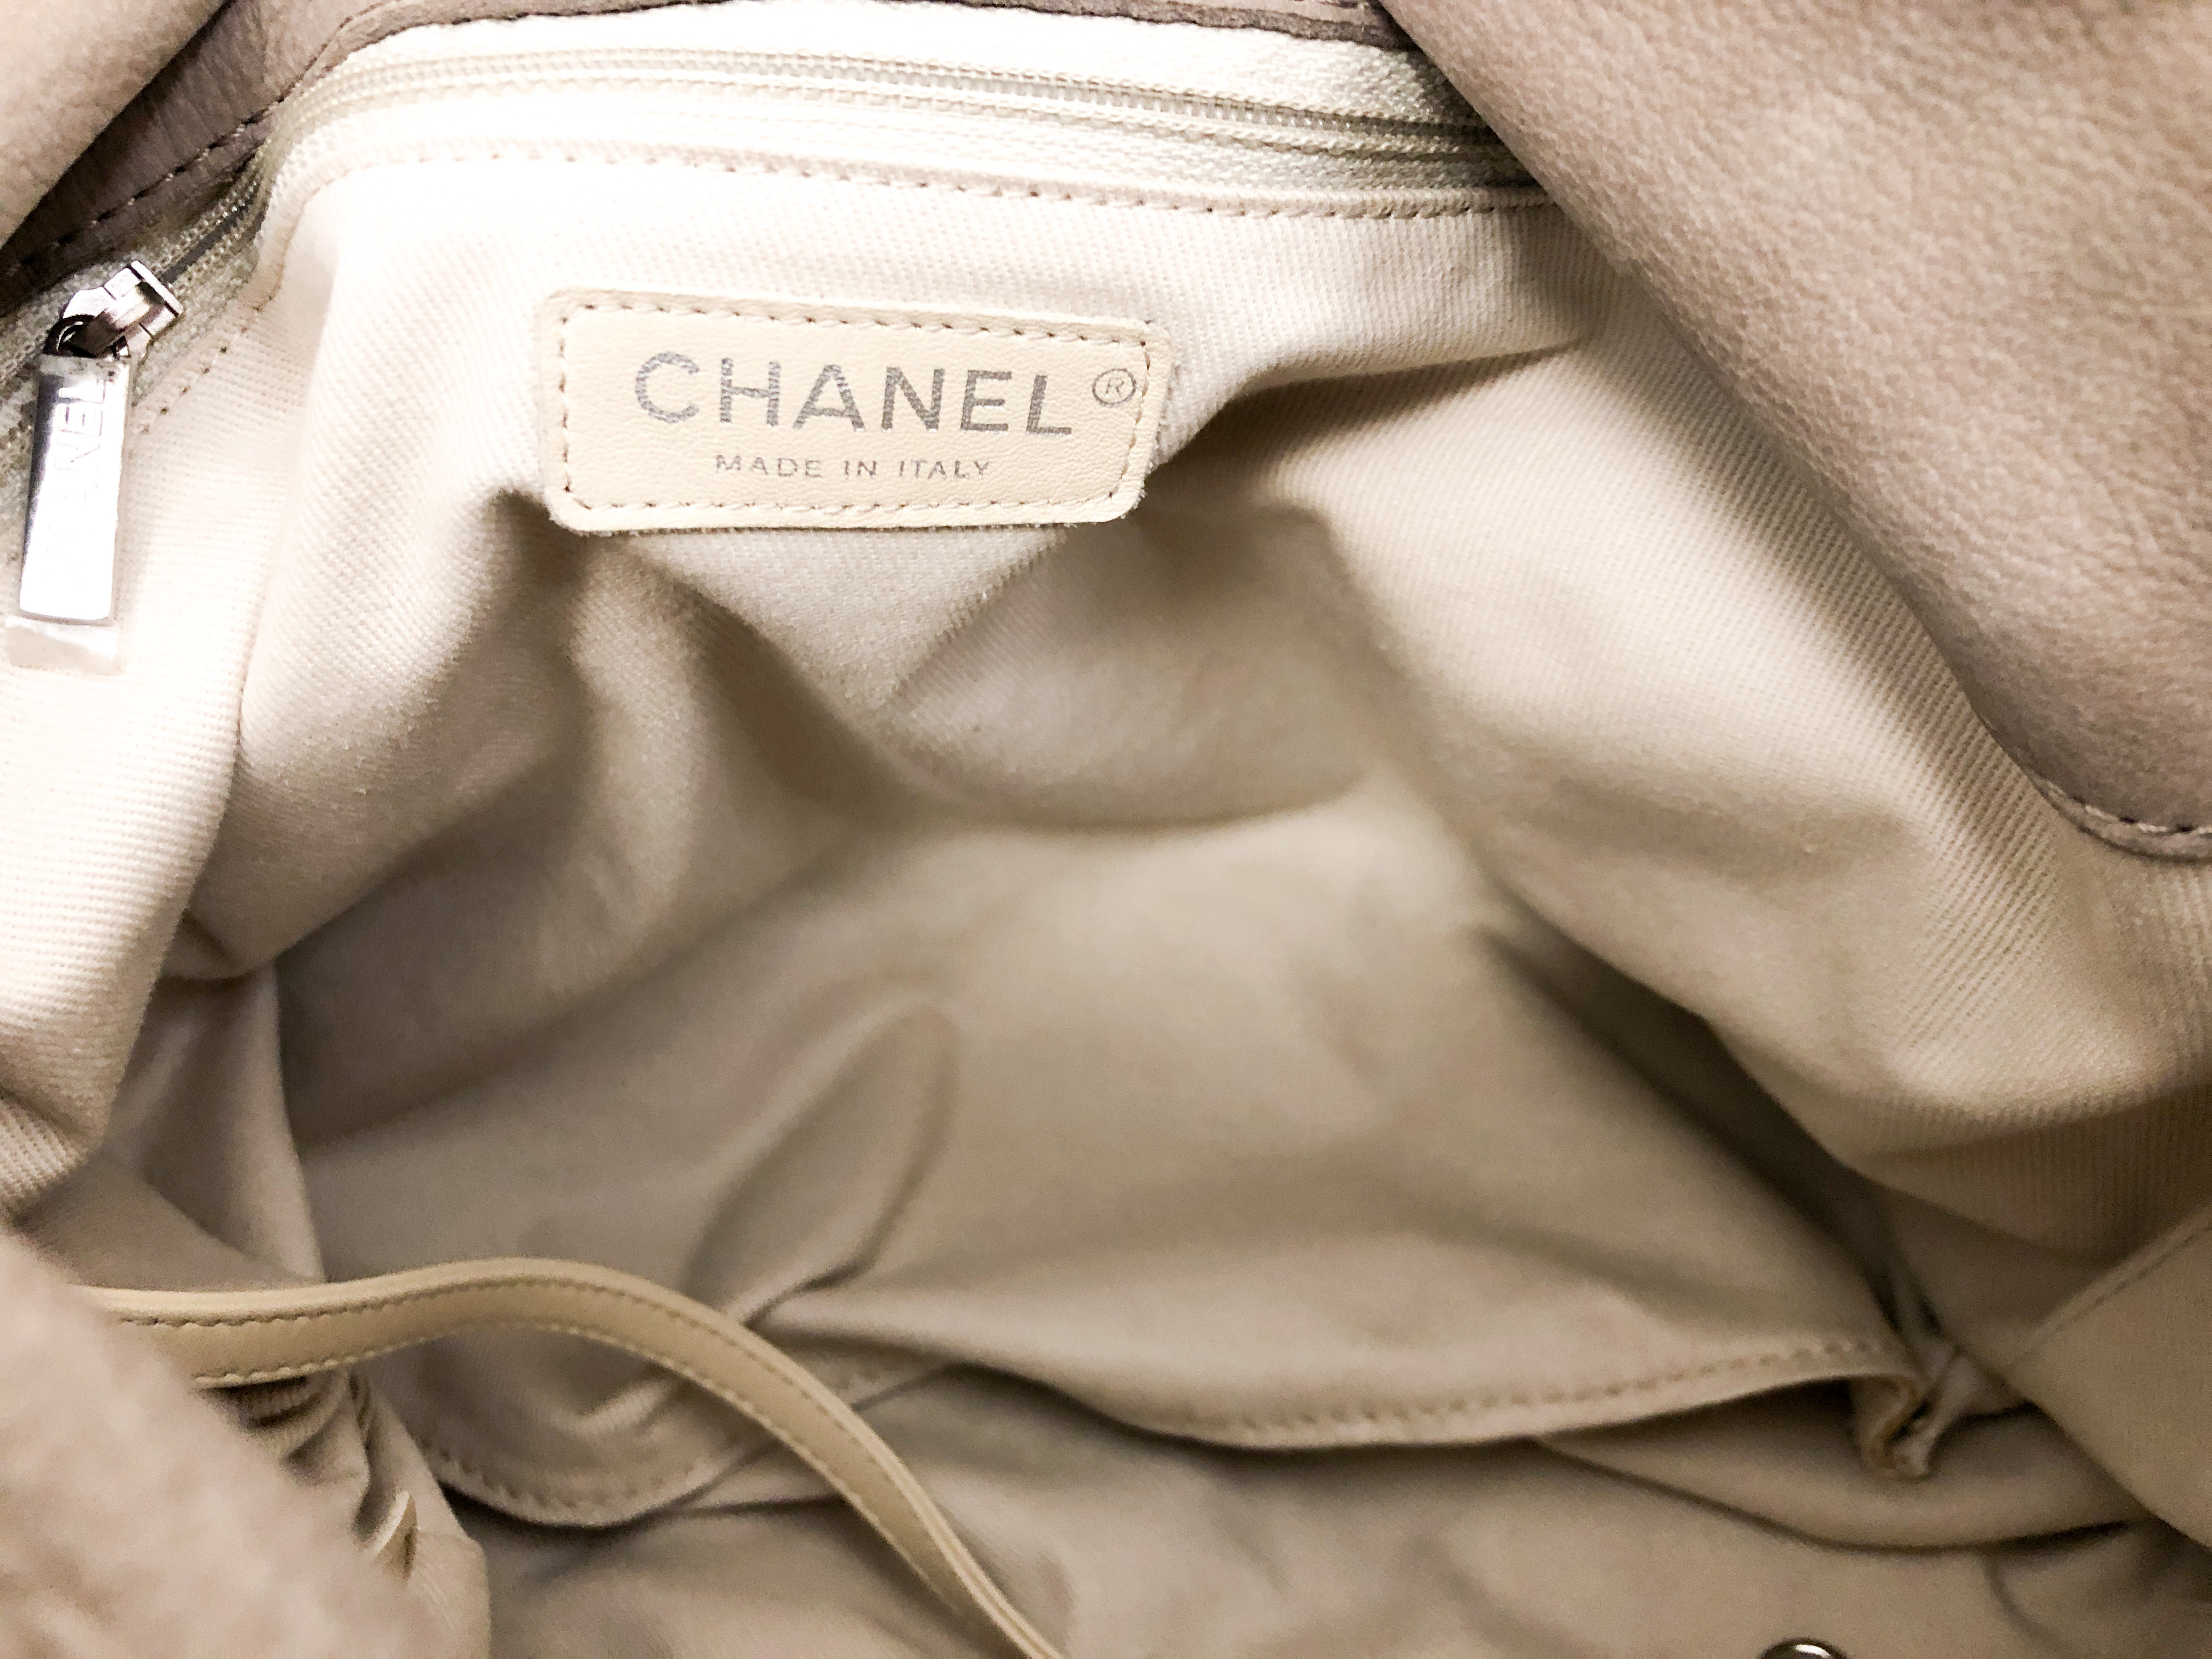 Chanel borsa in camoscio